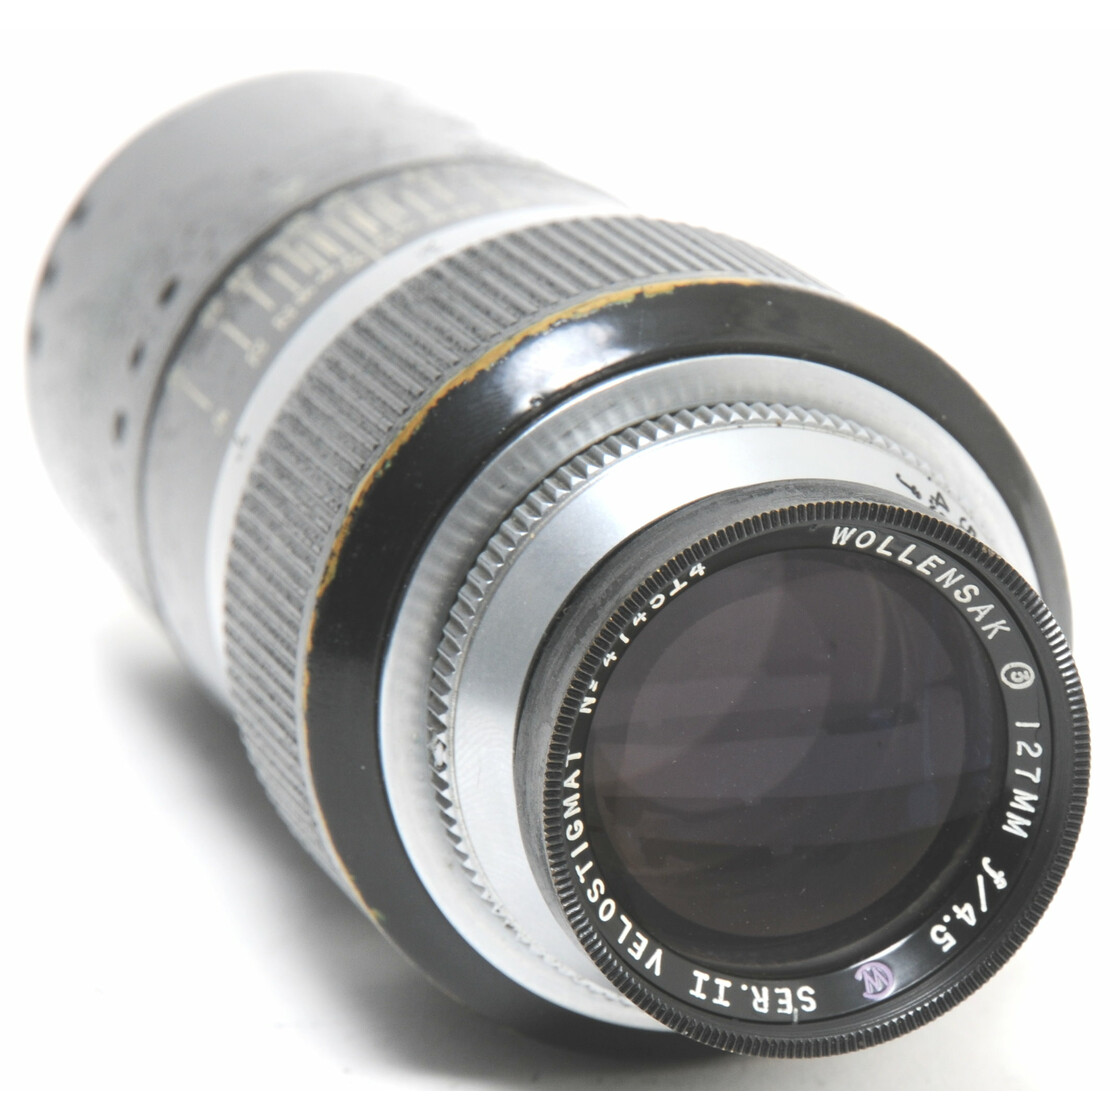 Leitz New York 4.5/127mm Wollensak Velostigmat for Leica screw ...